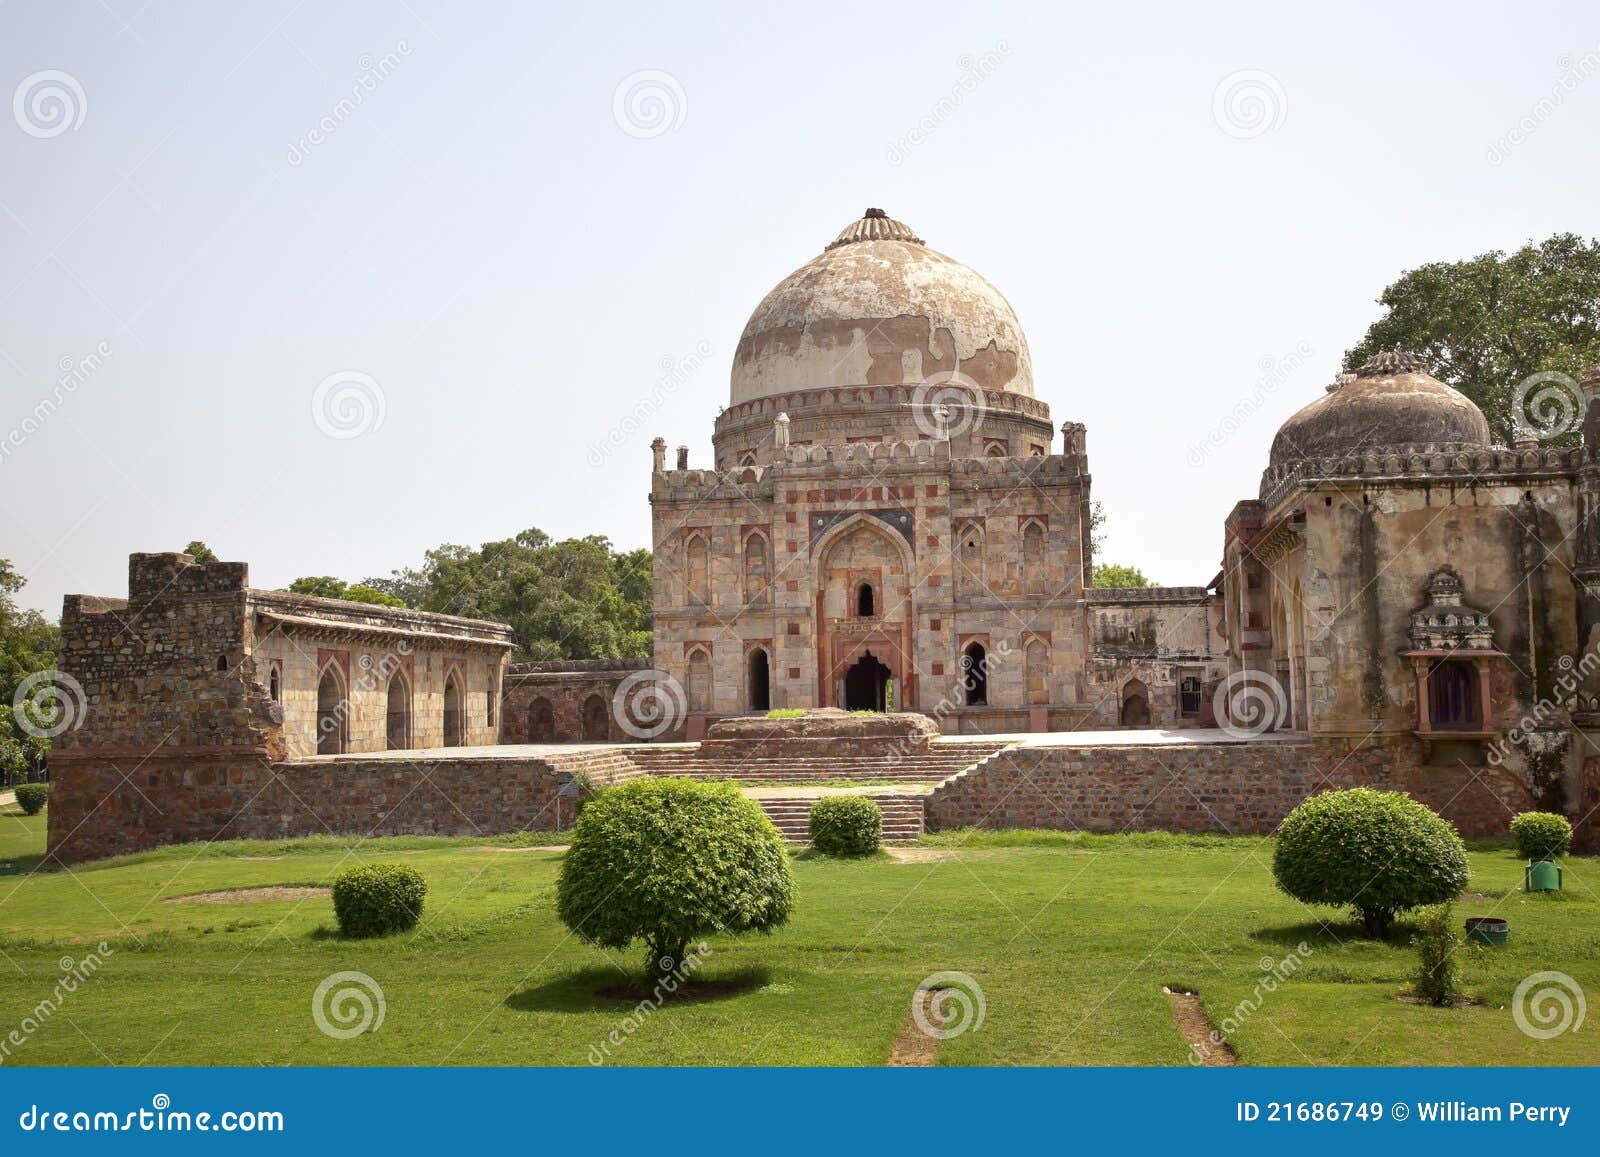 bara gumbad tomb lodi gardens new delhi india